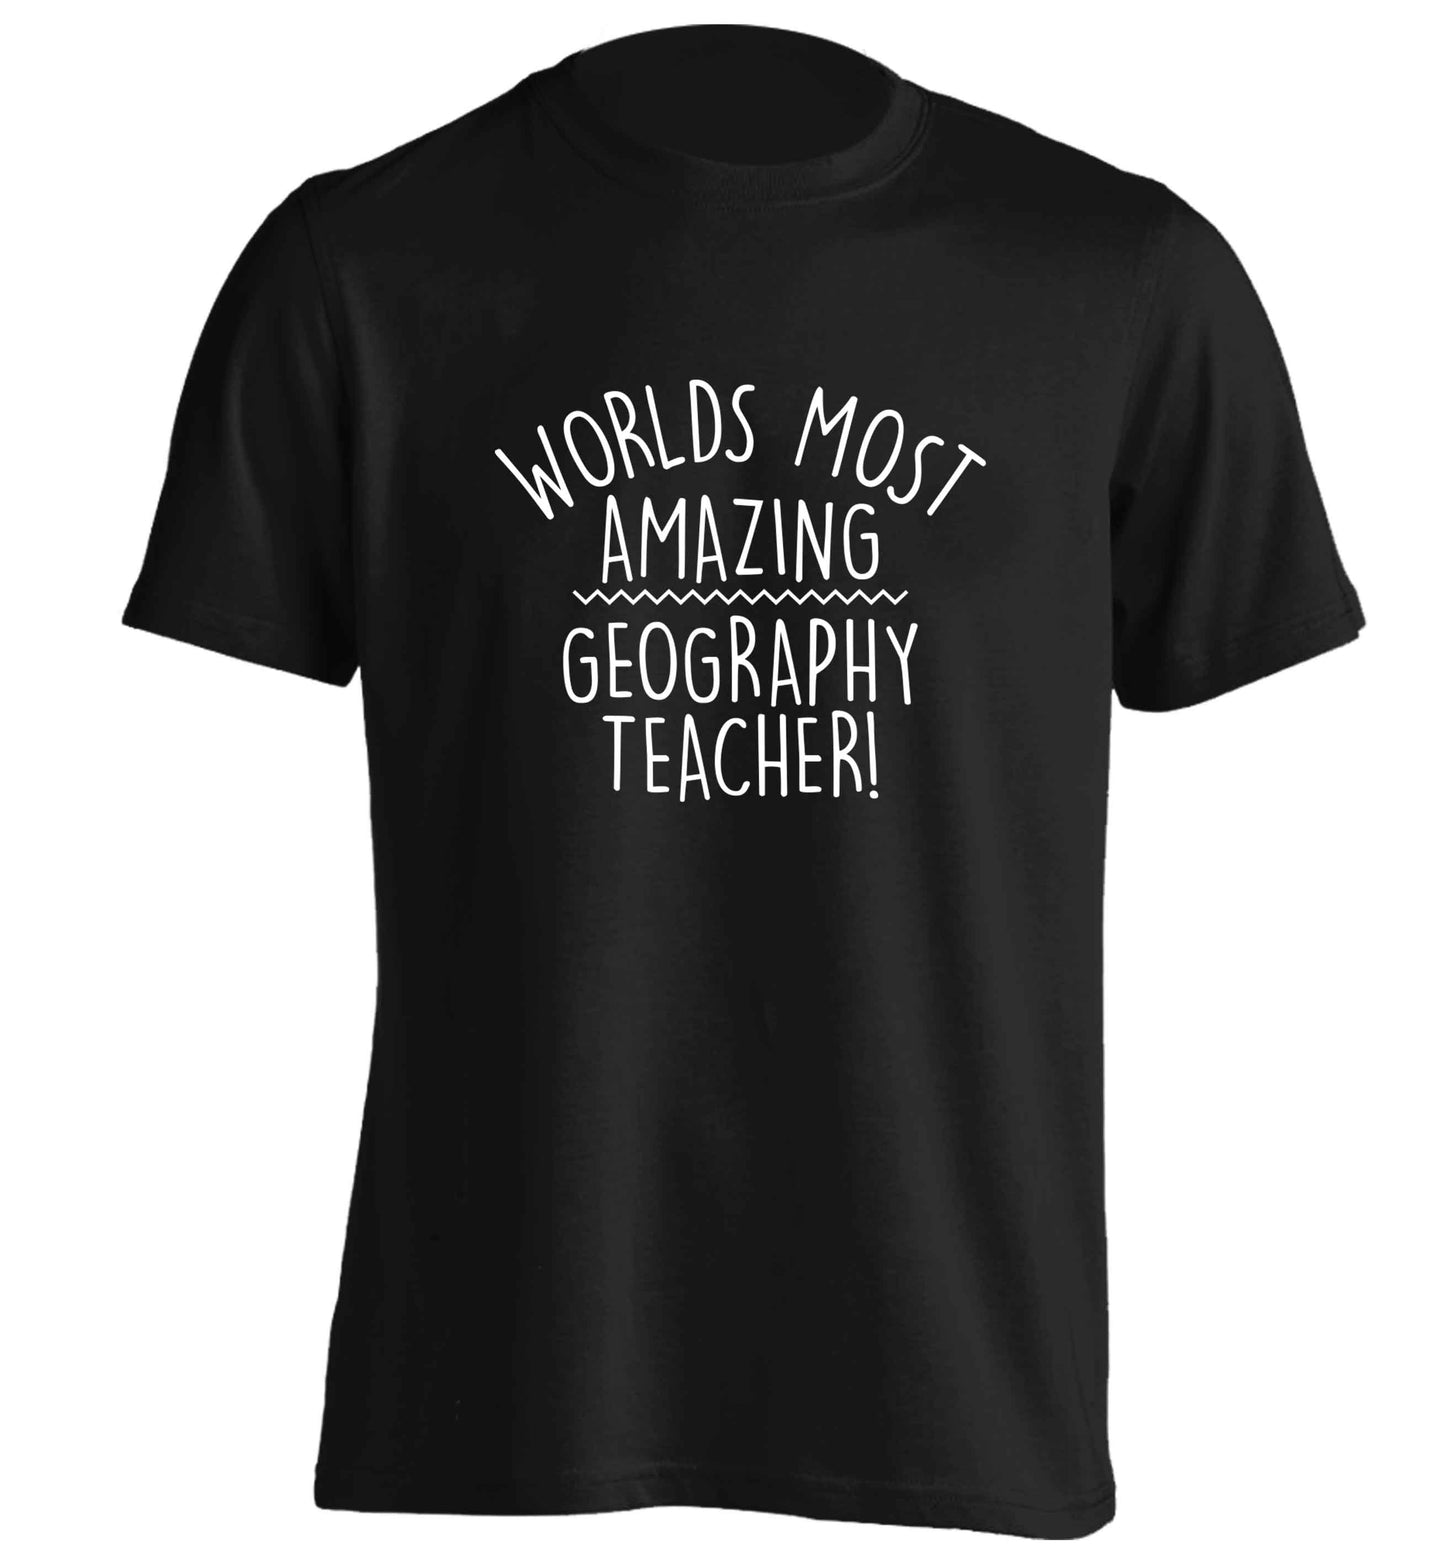 Worlds most amazing geography teacher adults unisex black Tshirt 2XL